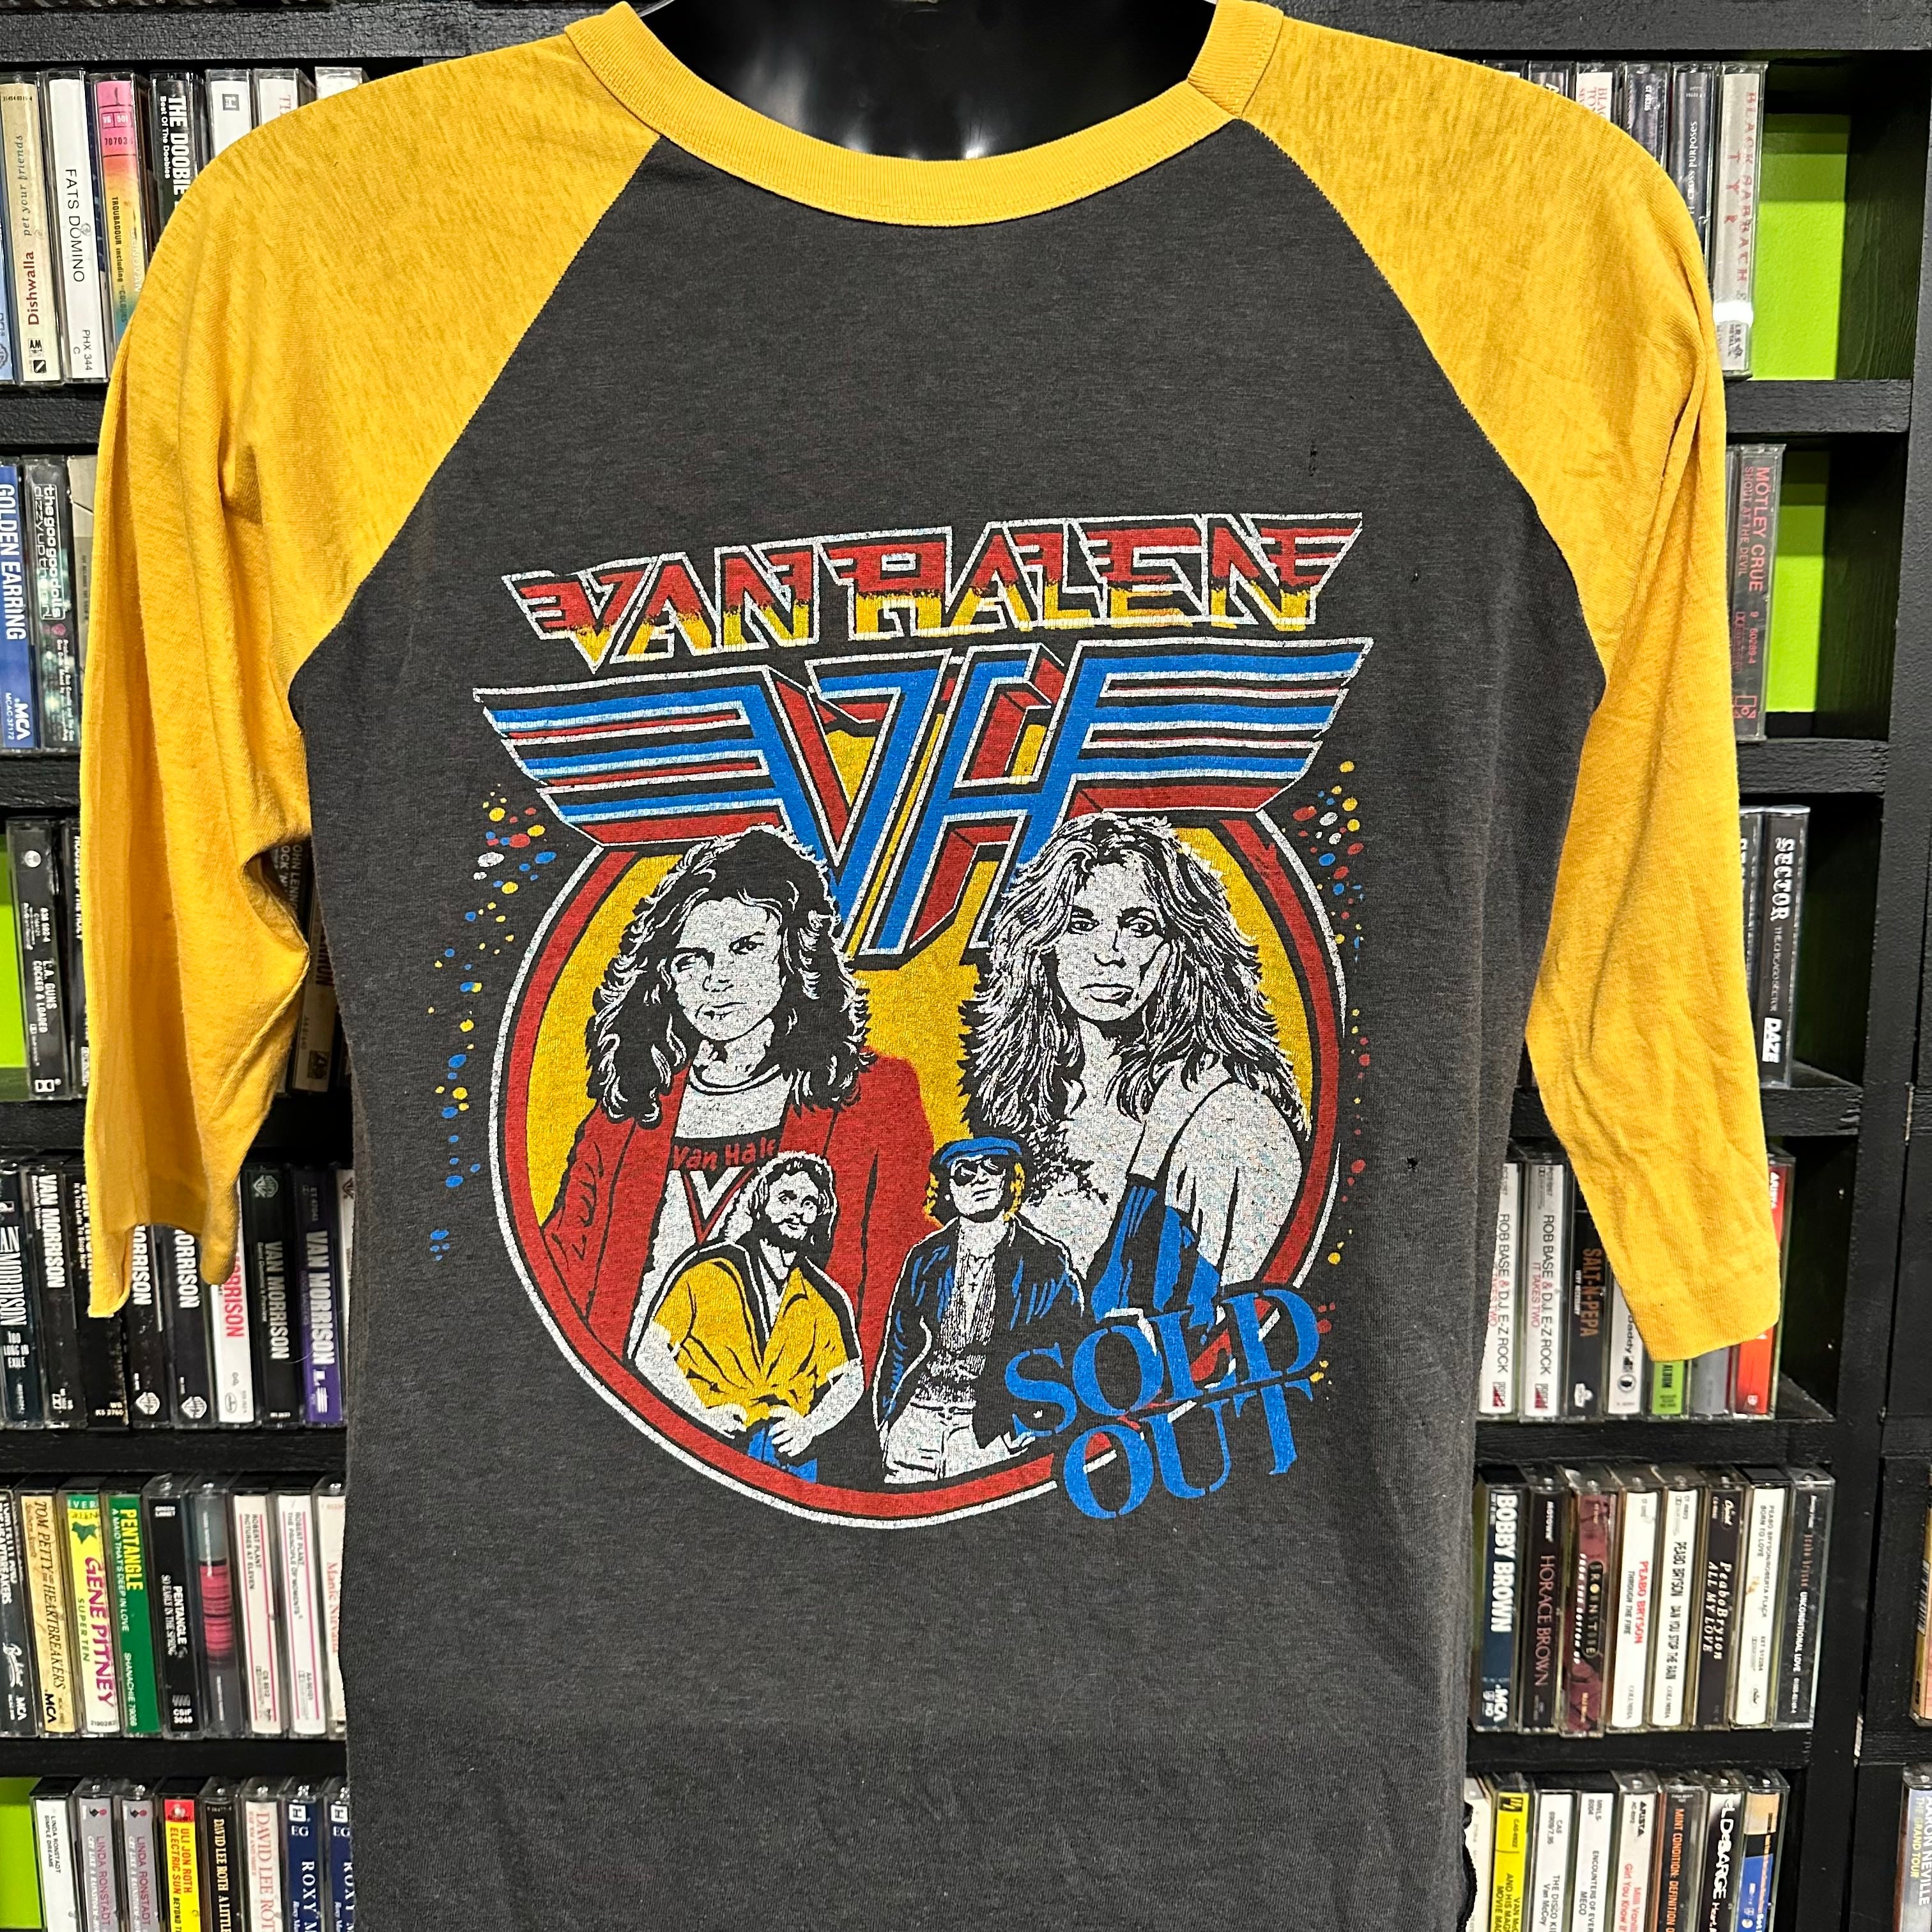 Van Halen 1982 Diver Down Raglan/Baseball T-Shirt, Grey w/Yellow Arms, S (Measures 23.5” Waist, 26” Long, 19.5 Pit To Pit) - Darkside Records